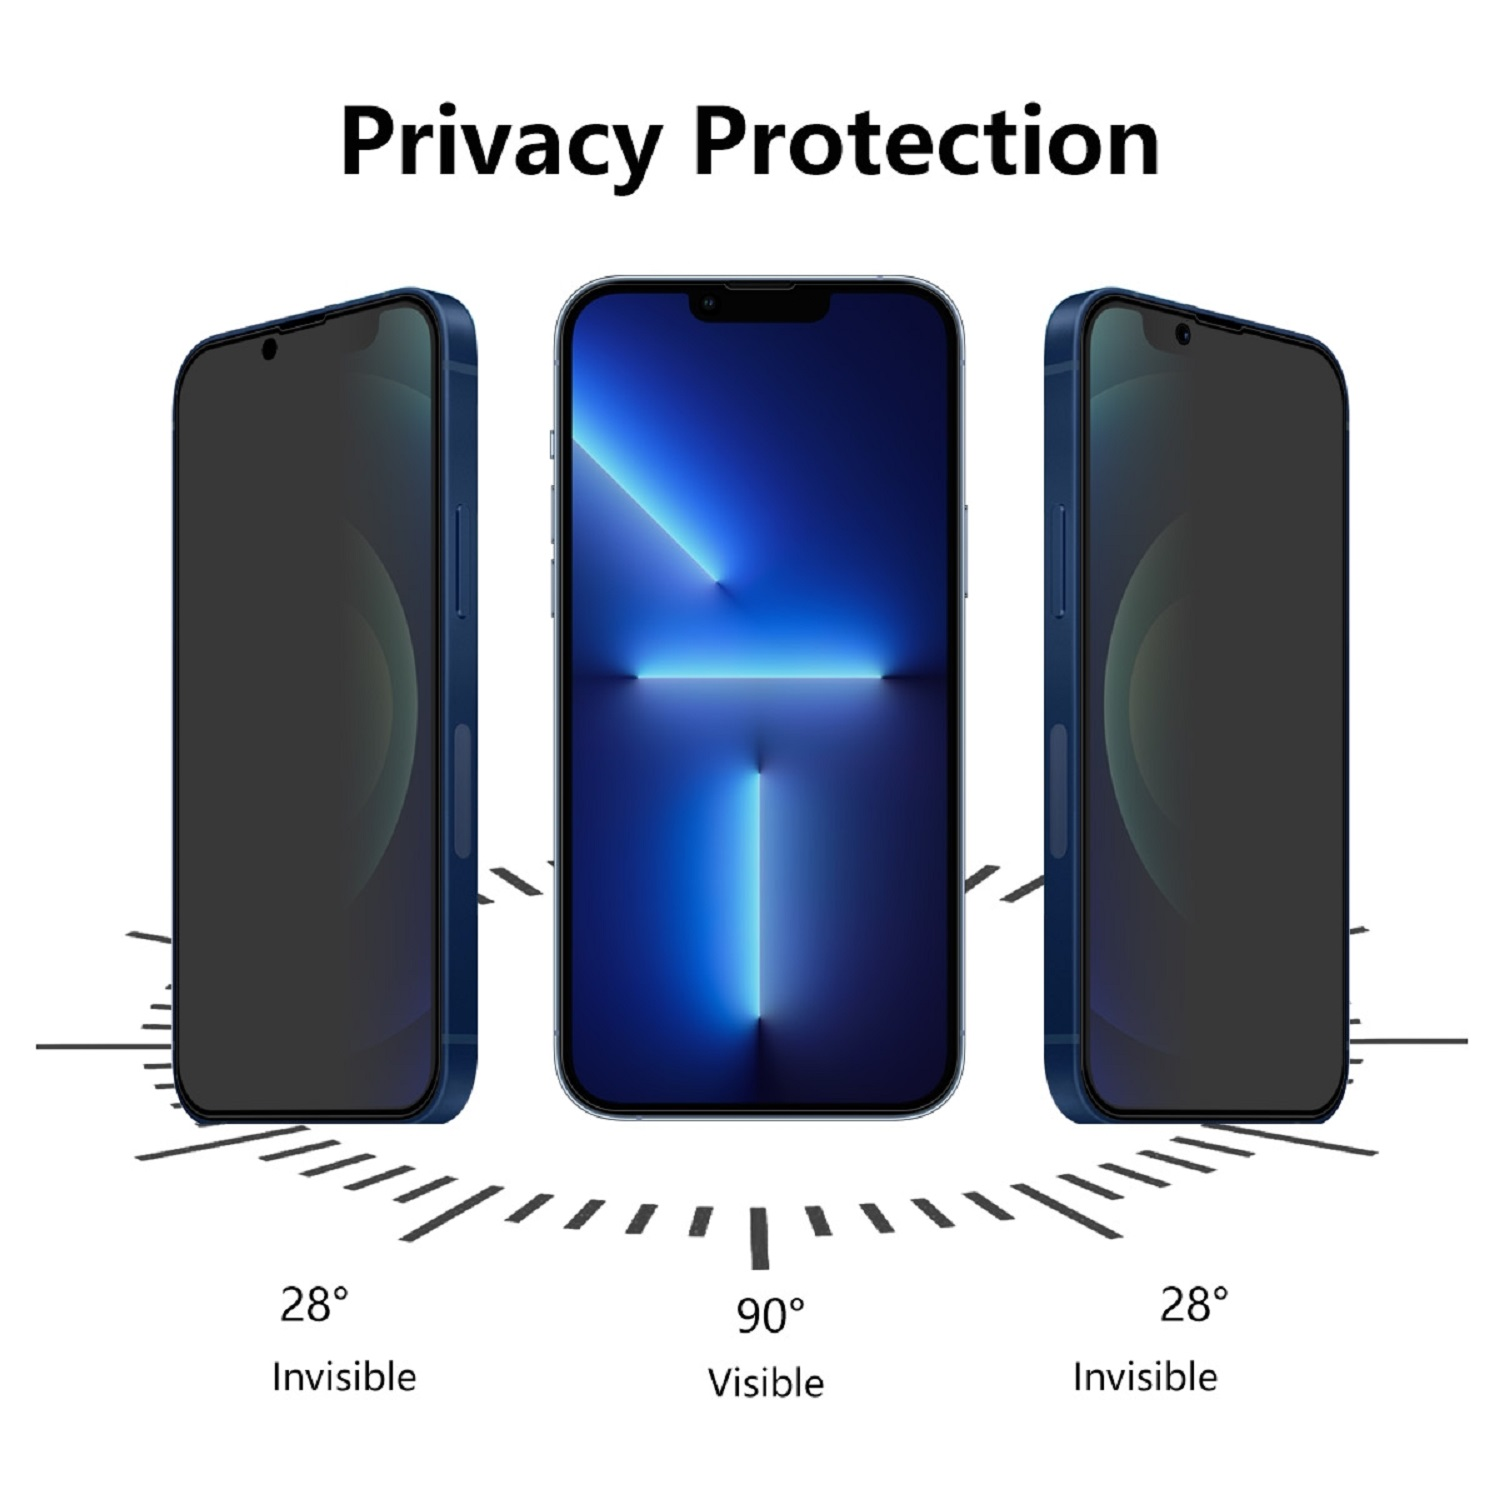 PROTECTORKING 1x 13 9H Privacy Schutzglas Displayschutzfolie(für COVER FULL Pro ANTI-SPY Apple Max) iPhone